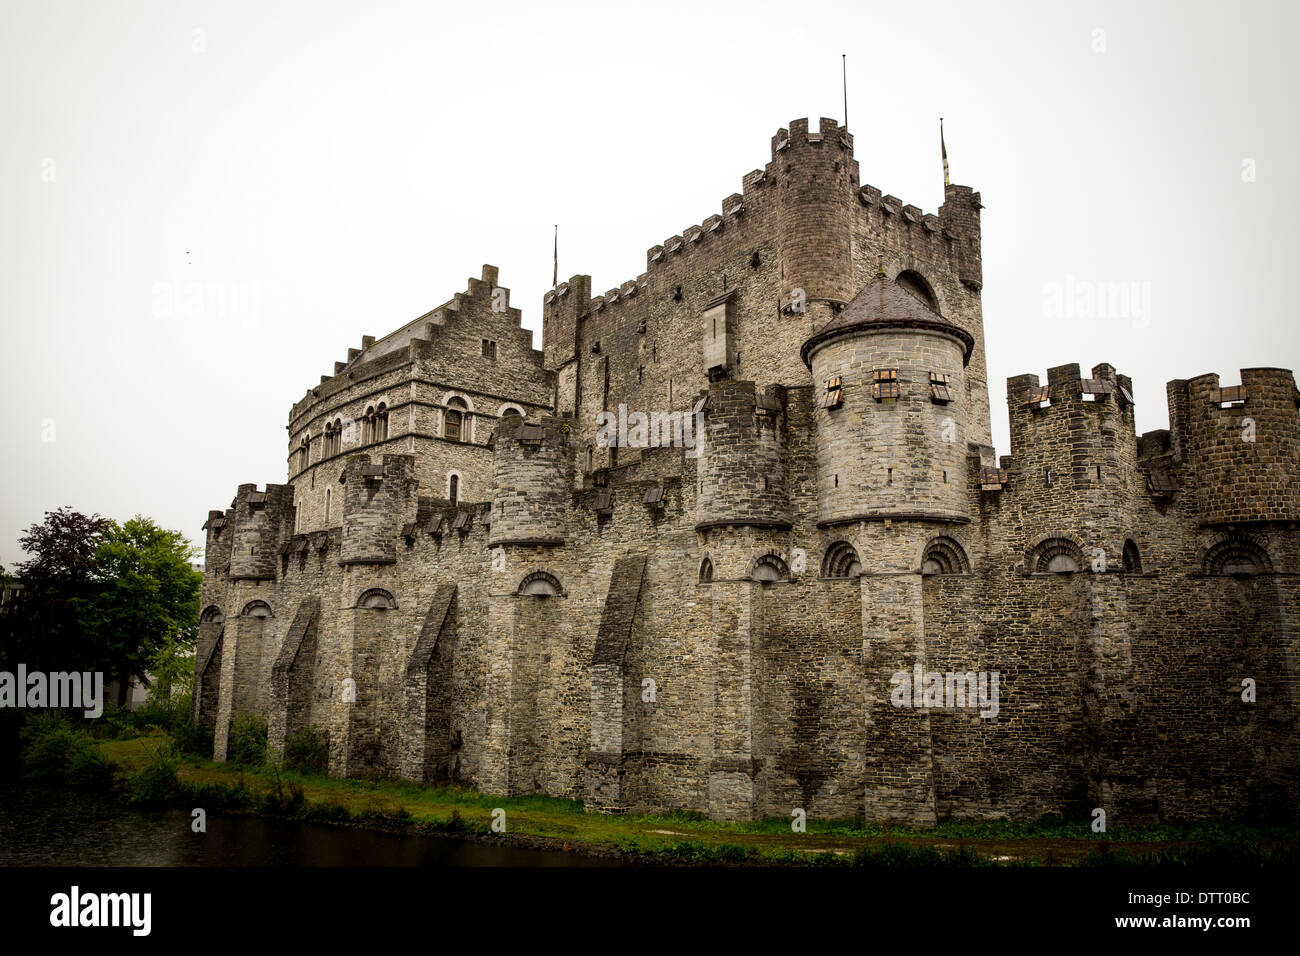 Gravensteen - The Counts of Flanders stone castle in Ghent Belgium. Stock Photo